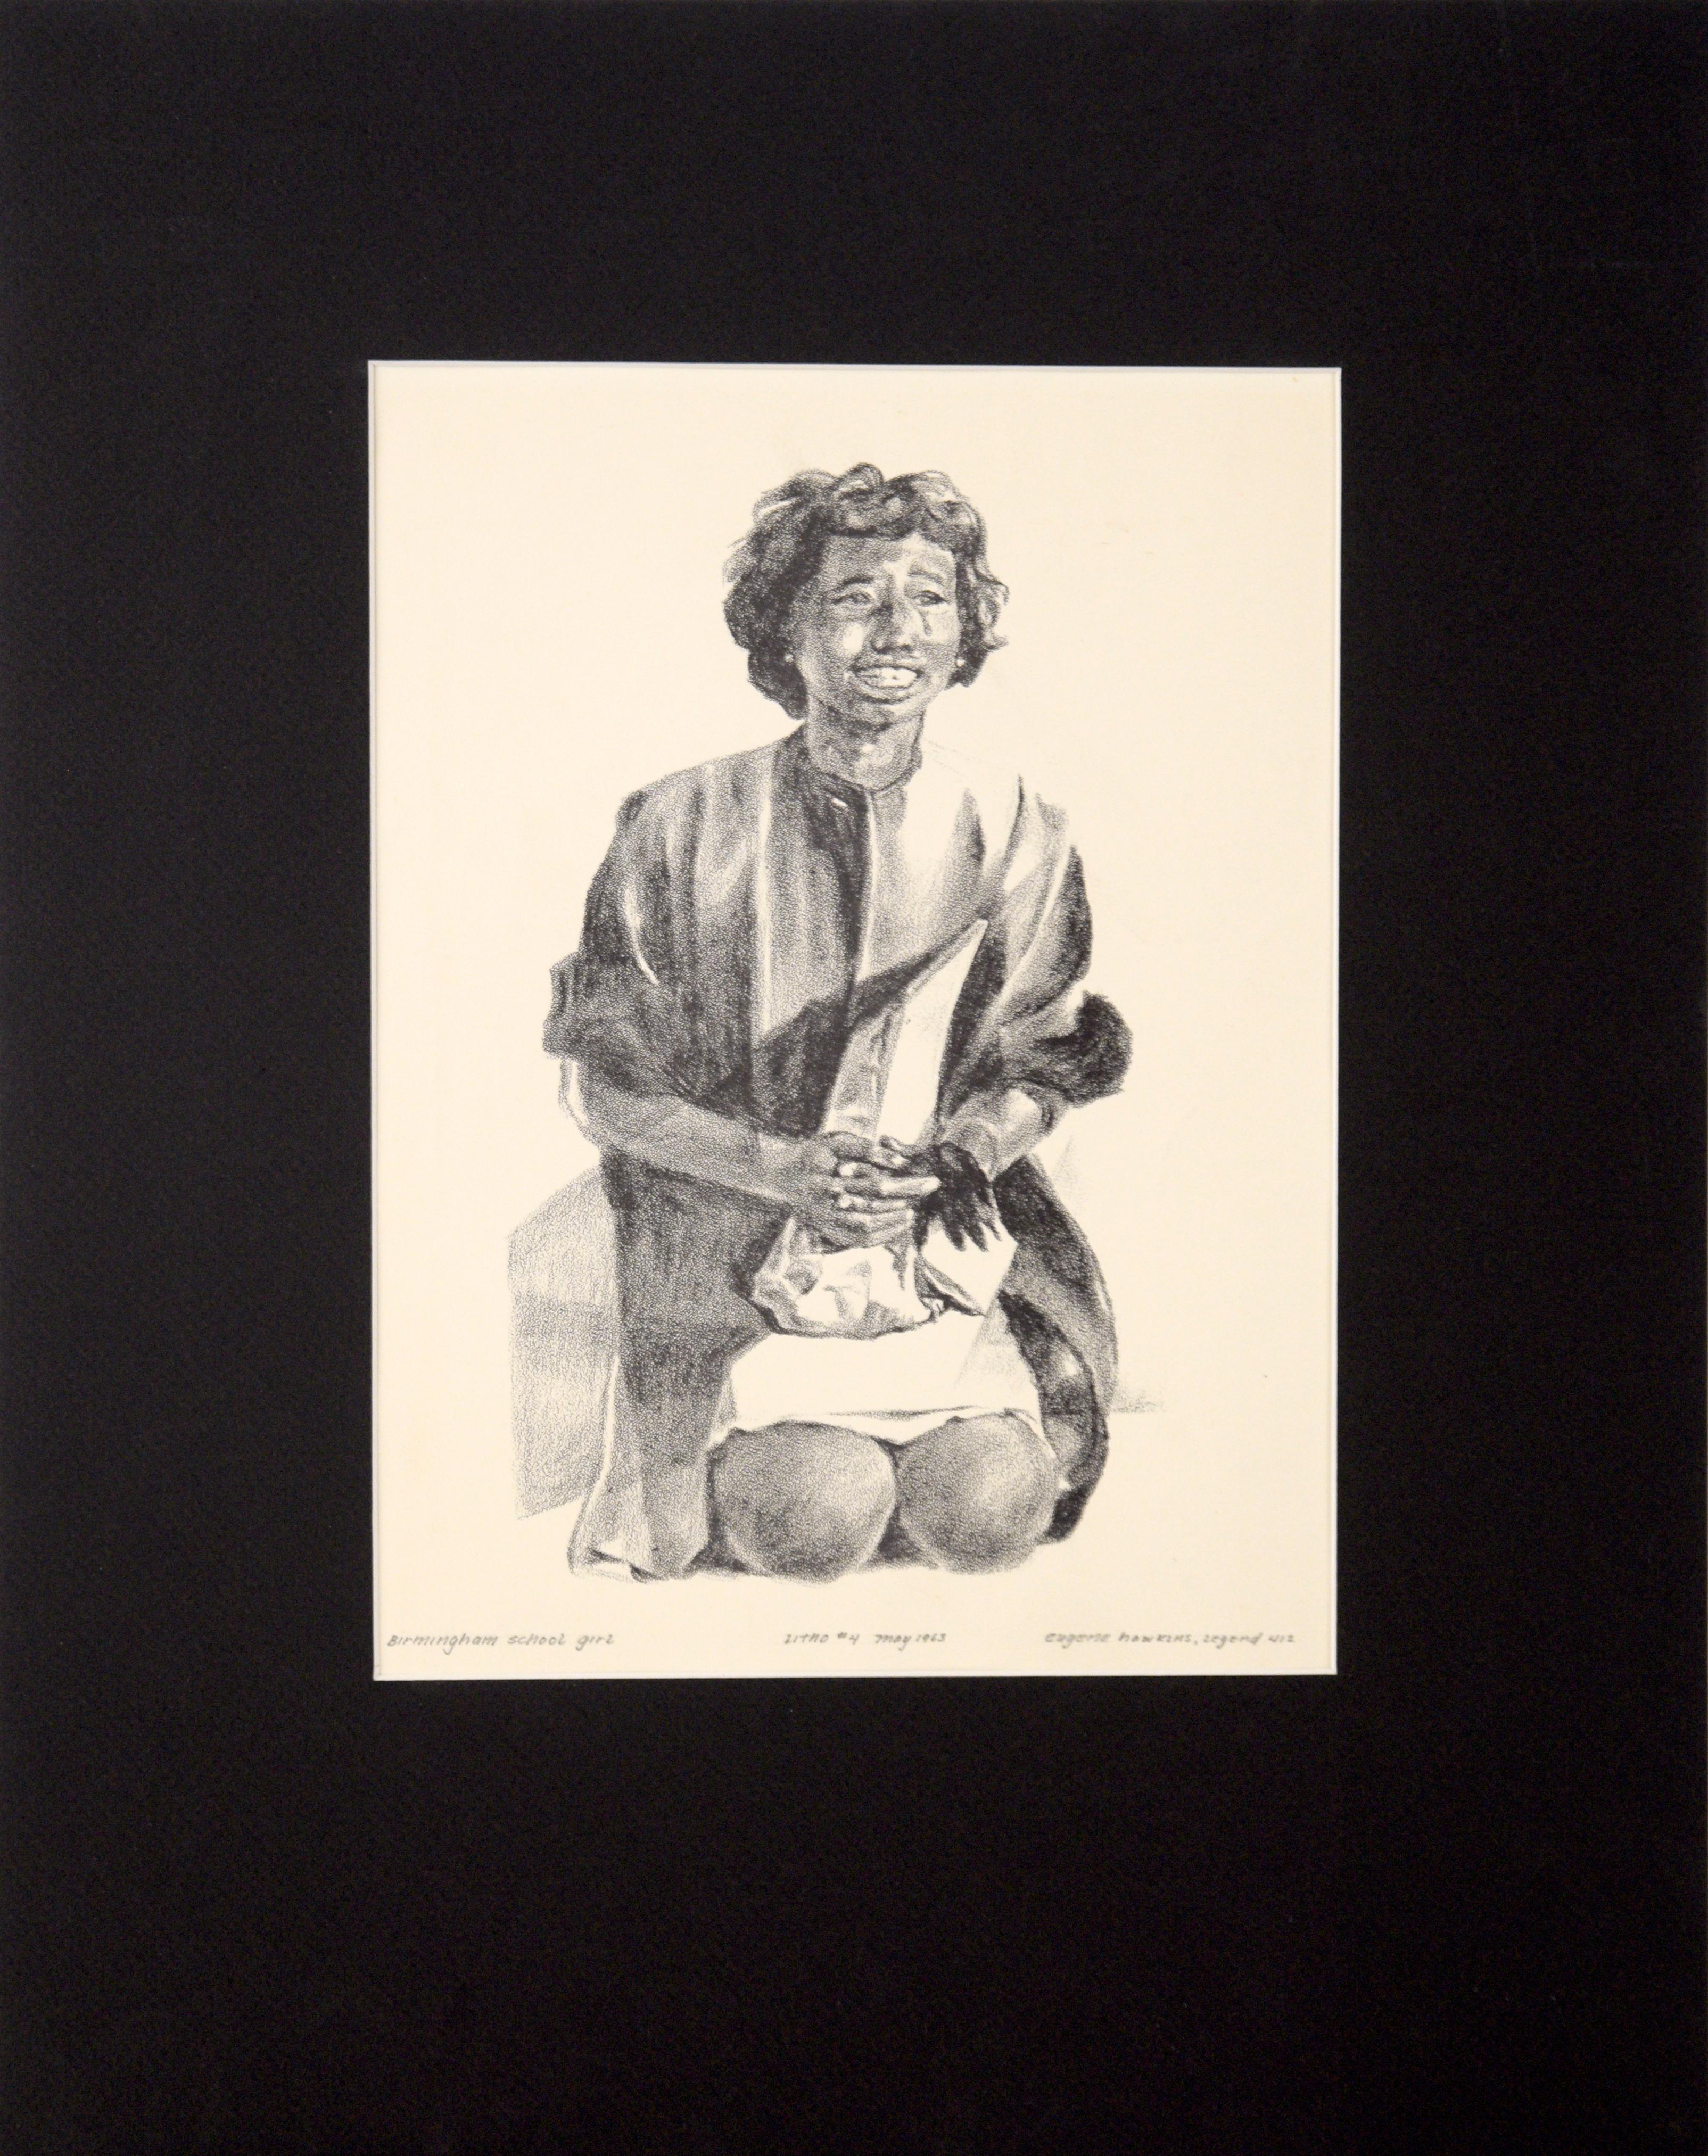 „Birmingham School Girl“ – seltene signierte figurative Lithographie in Tinte auf Papier